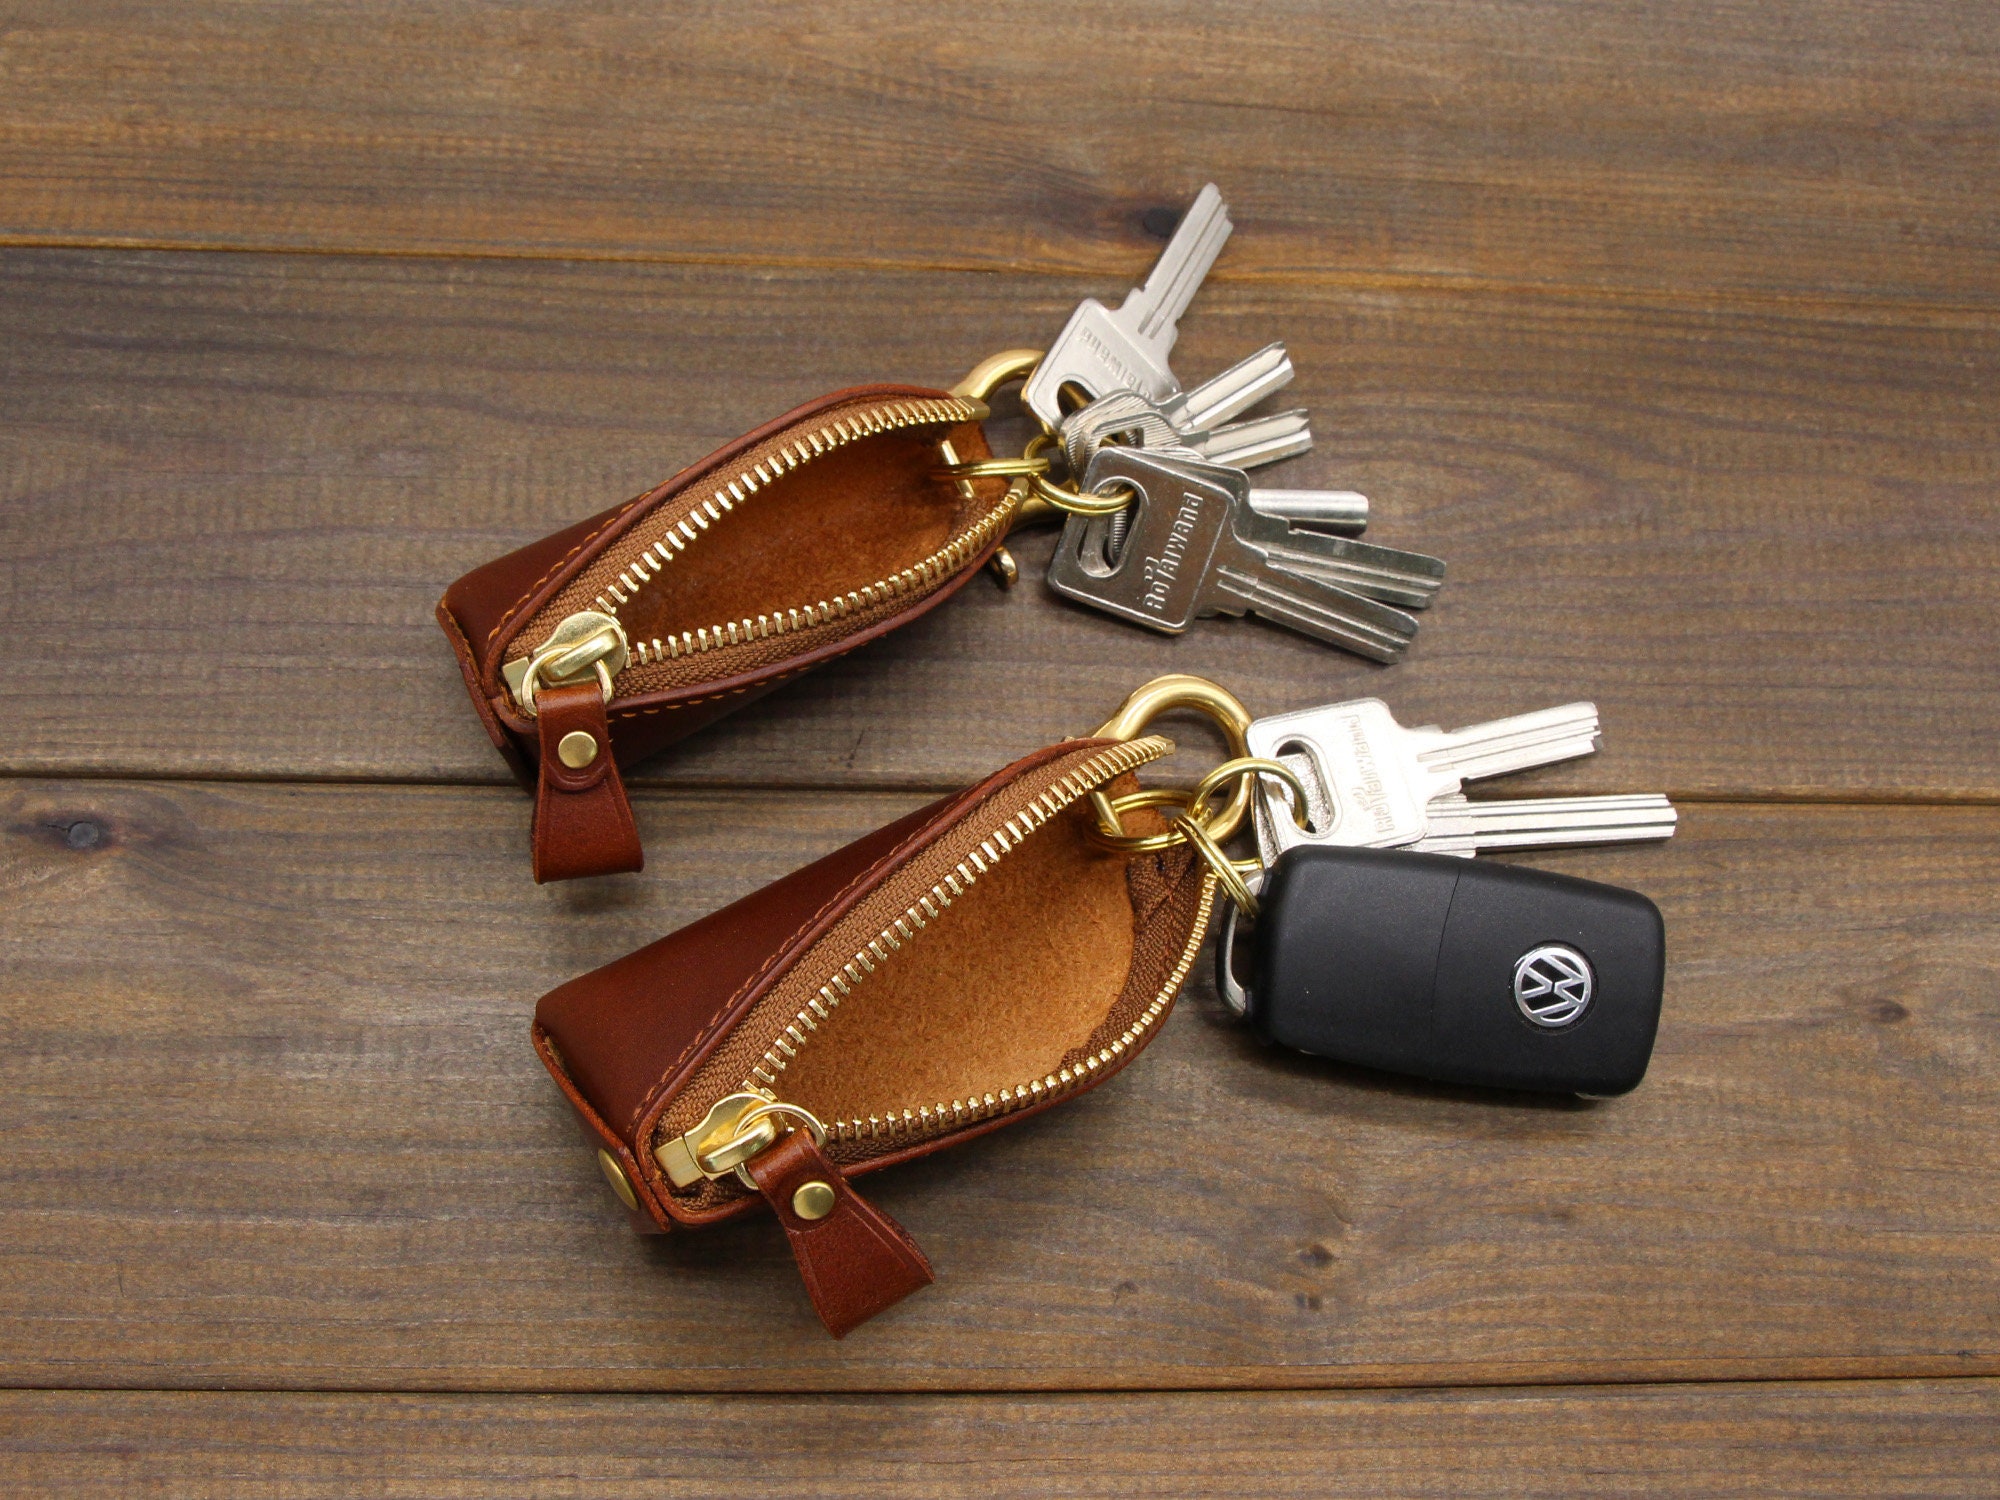 Bearfire Fit Chevrolet Car Key Case Leather Key Bag Car Smart Key Chain Keychain Holder Metal Hook Keyring Zipper Bag for Remote Key Fob